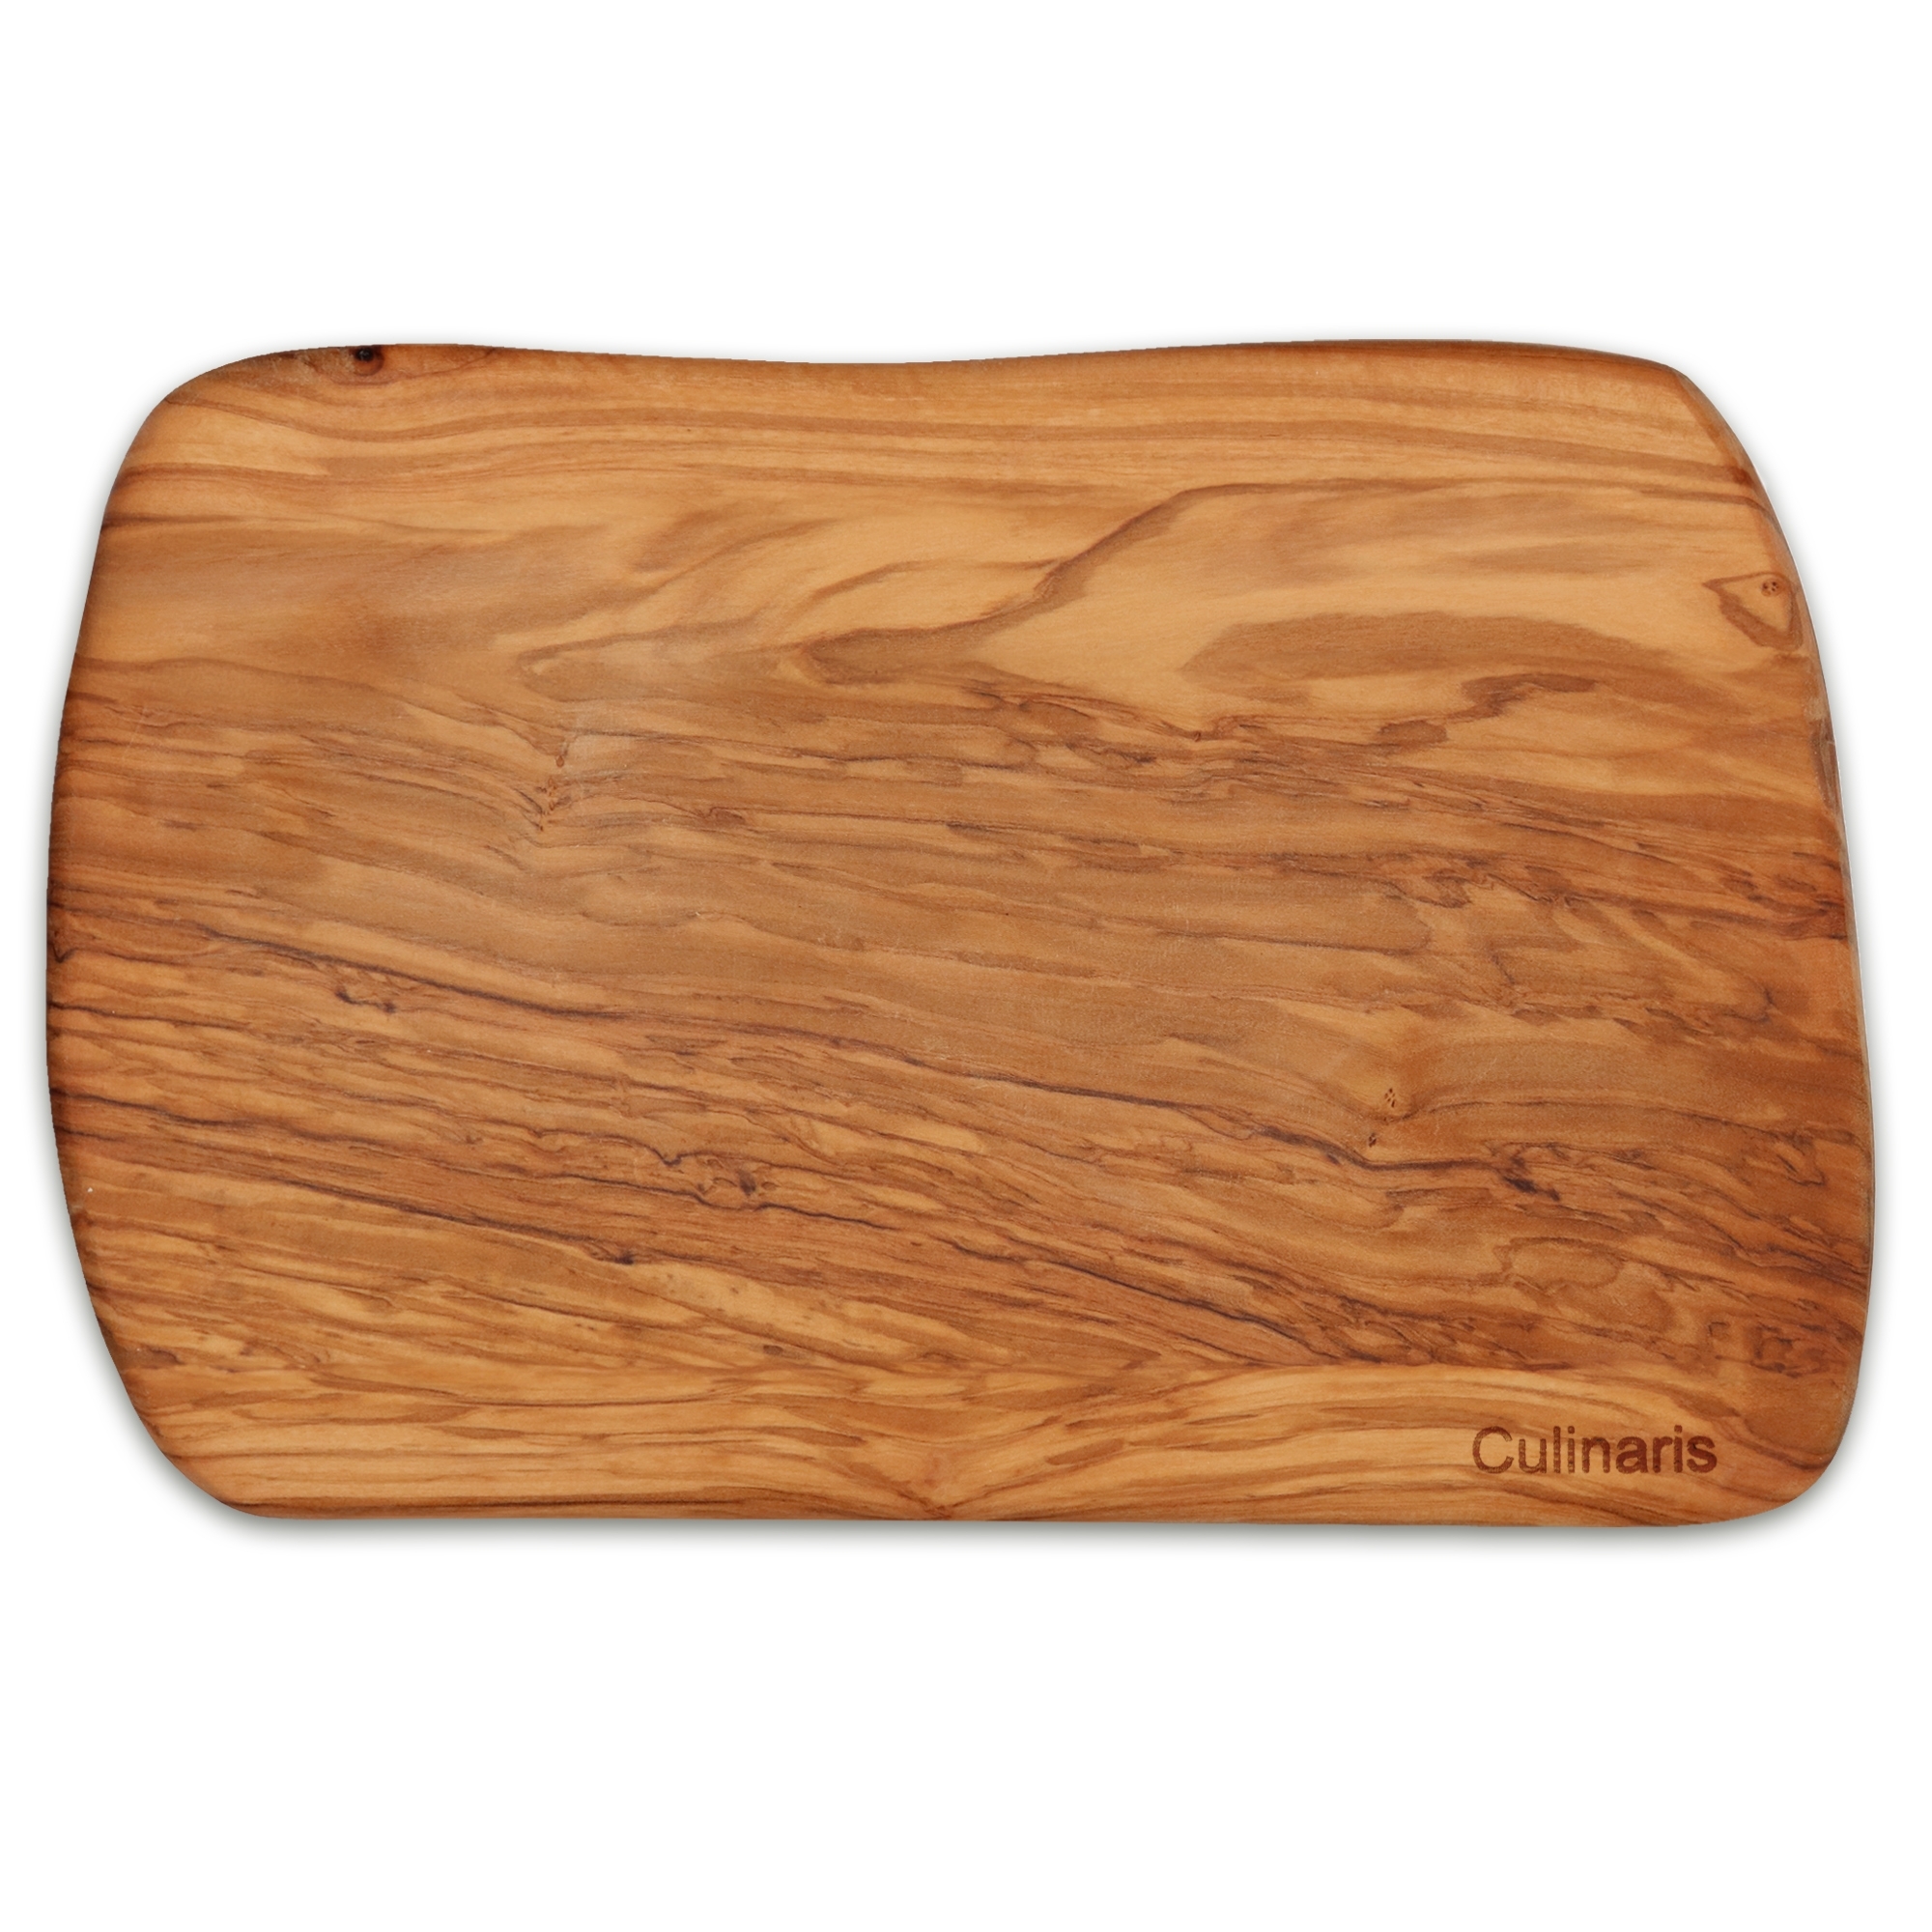 Culinaris - cutting board - olive wood - 30 x 20 cm